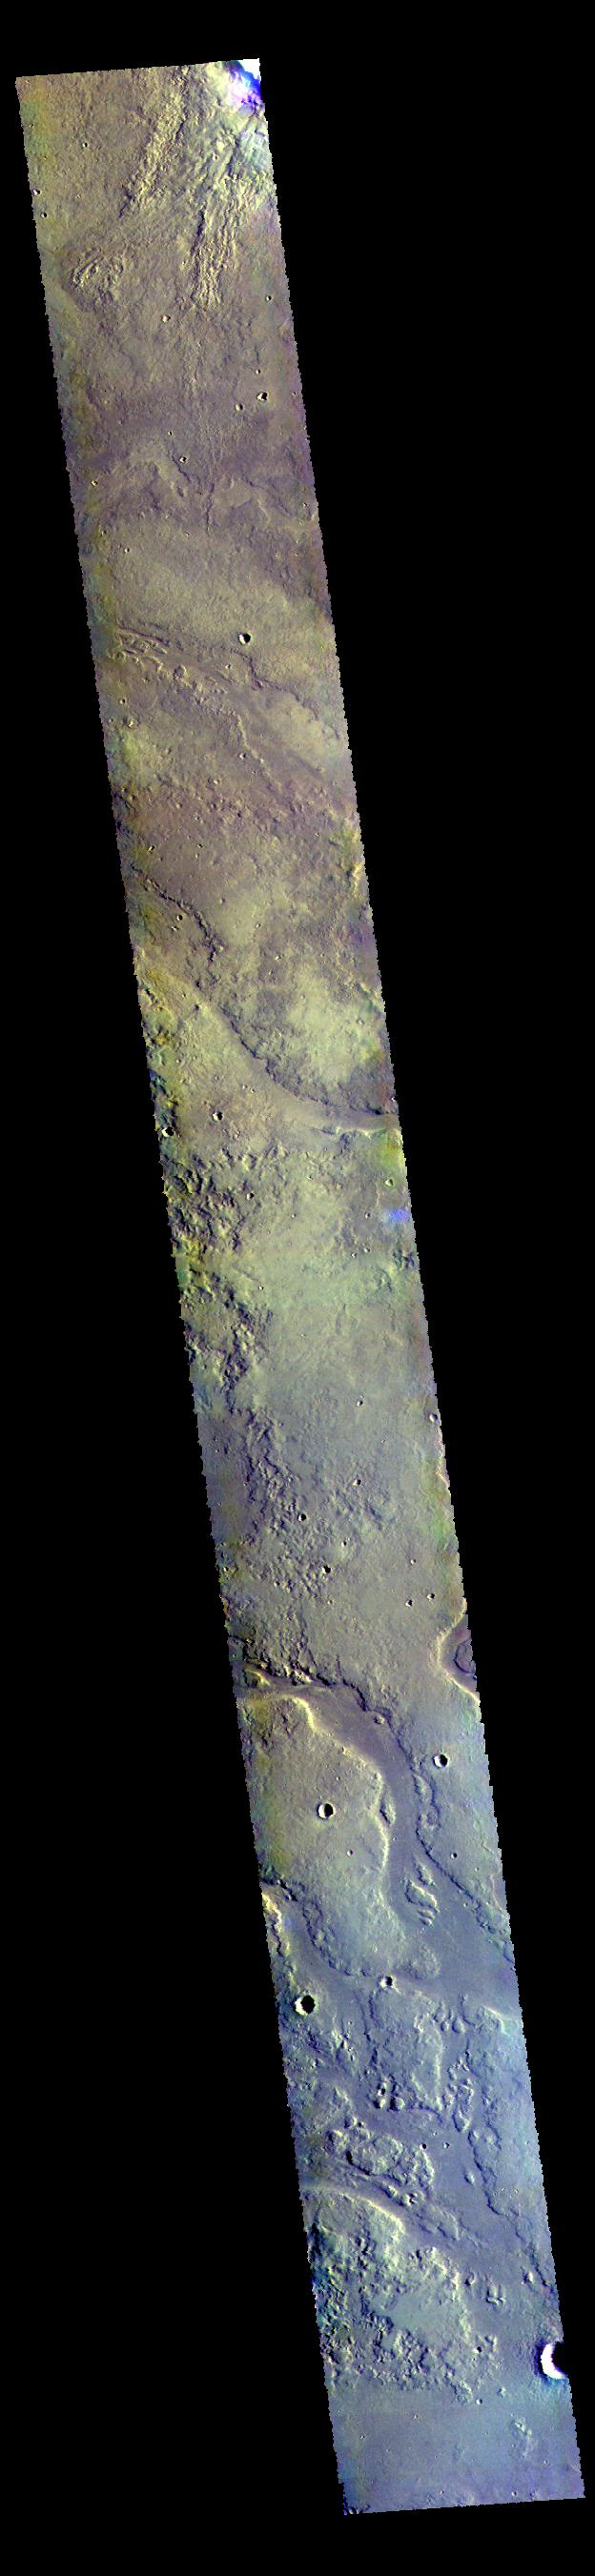 PIA22781: Granicus Valles - False Color